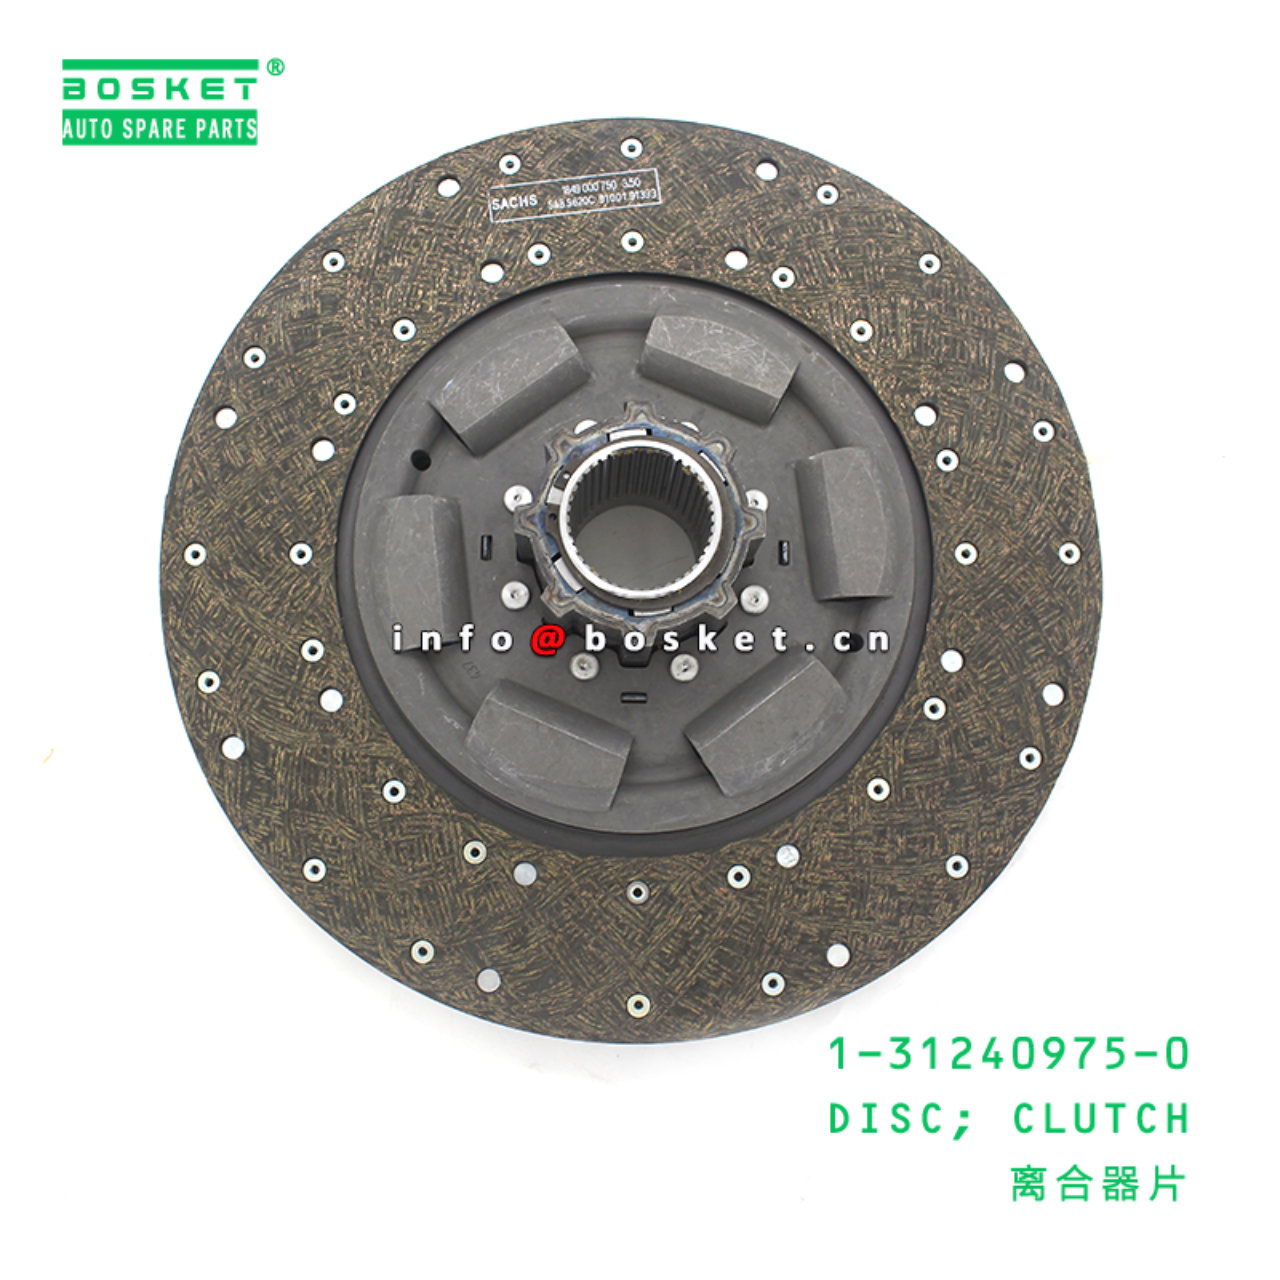  1-31240975-0 Clutch Disc 1312409750 Suitable for ISUZU CYZ EXZ